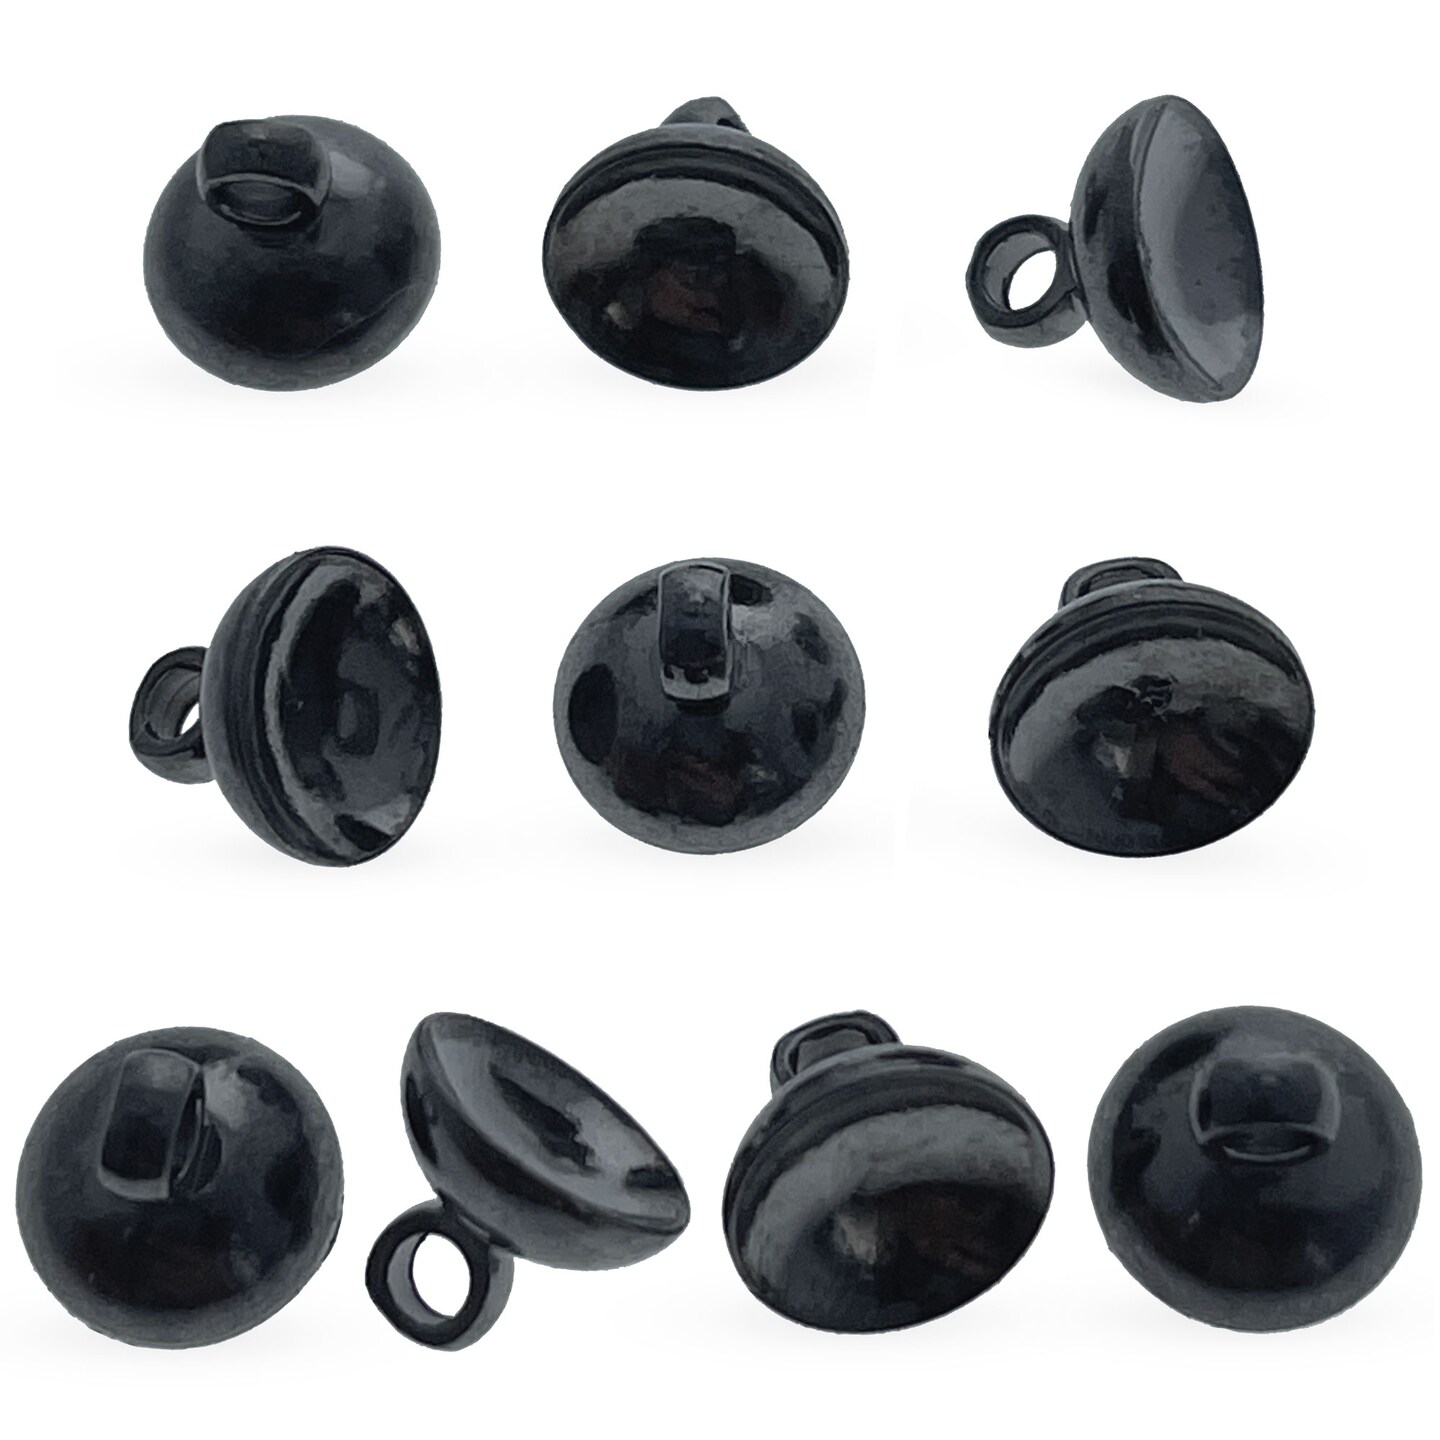 10 Gunblack Tone Metal Ornament Caps - Egg Top Findings, End Caps 0.32 Inches